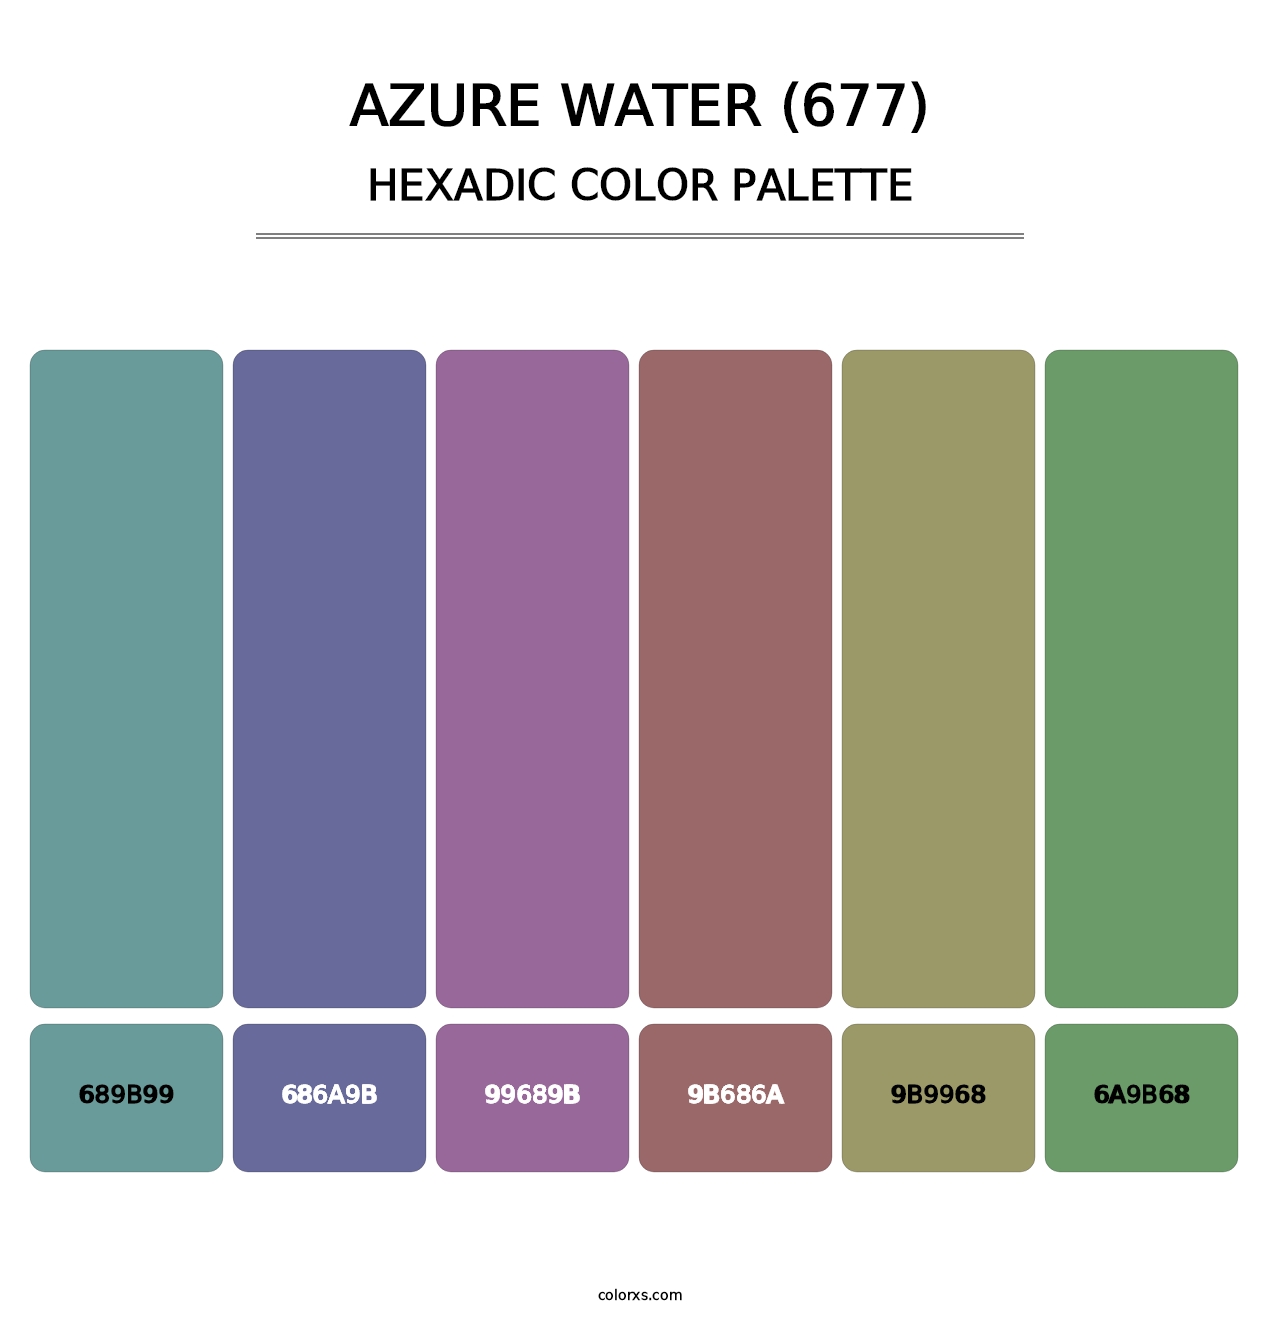 Azure Water (677) - Hexadic Color Palette